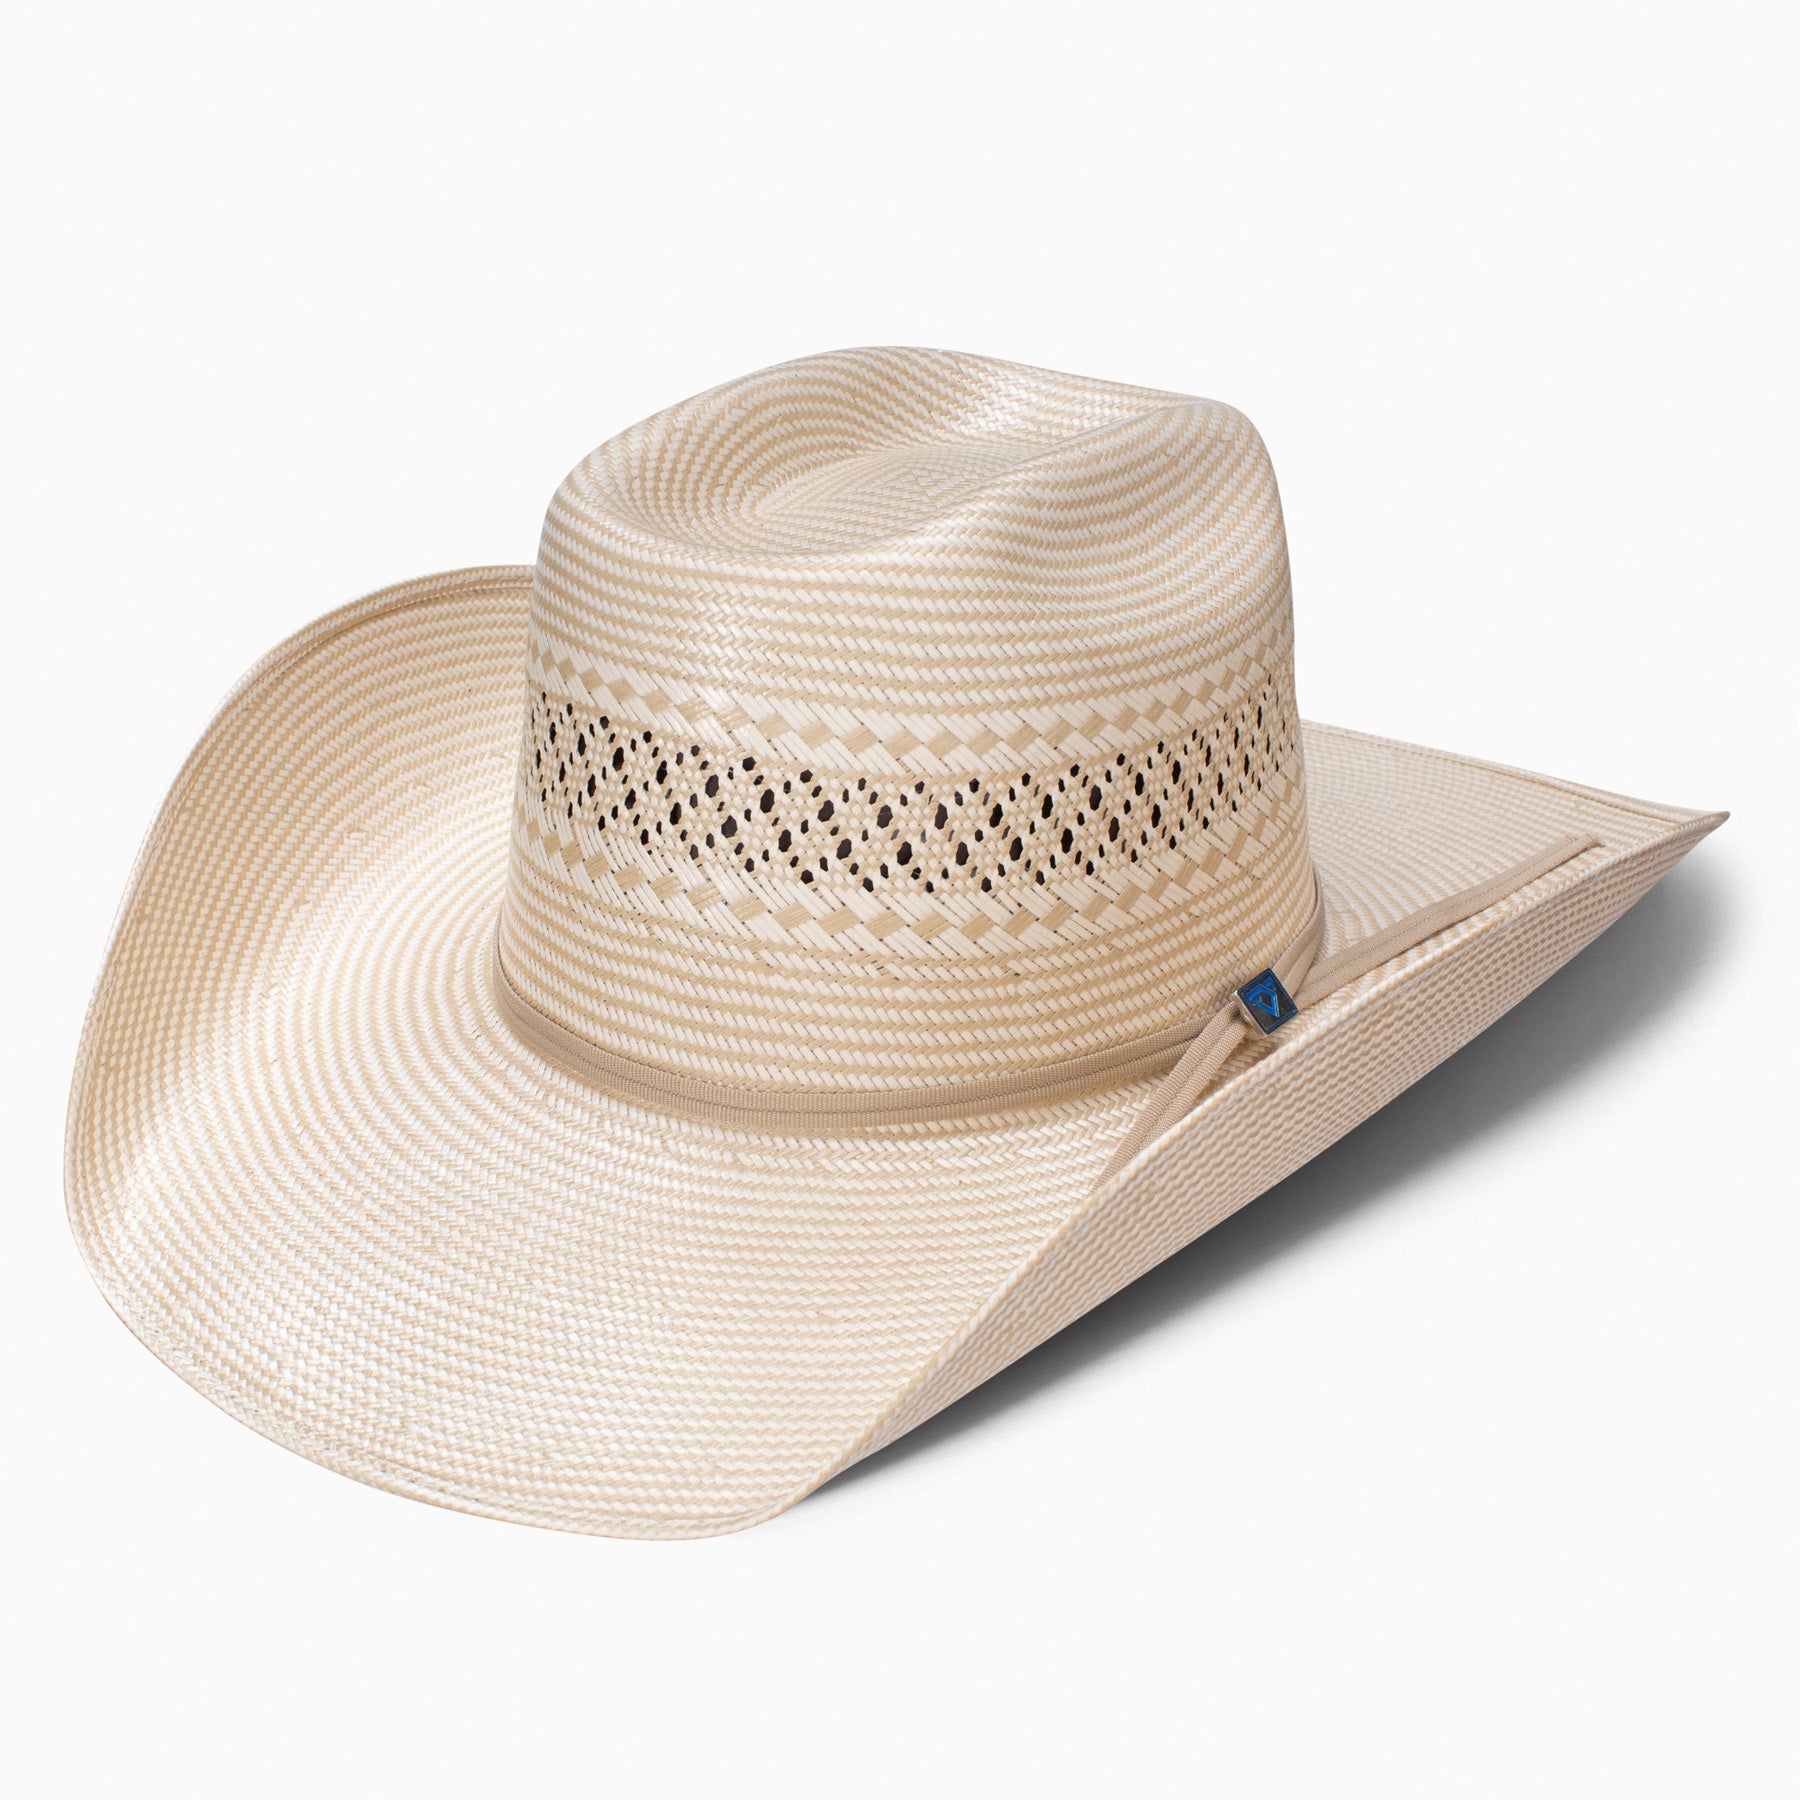 Durable Straw Cowboy Hat